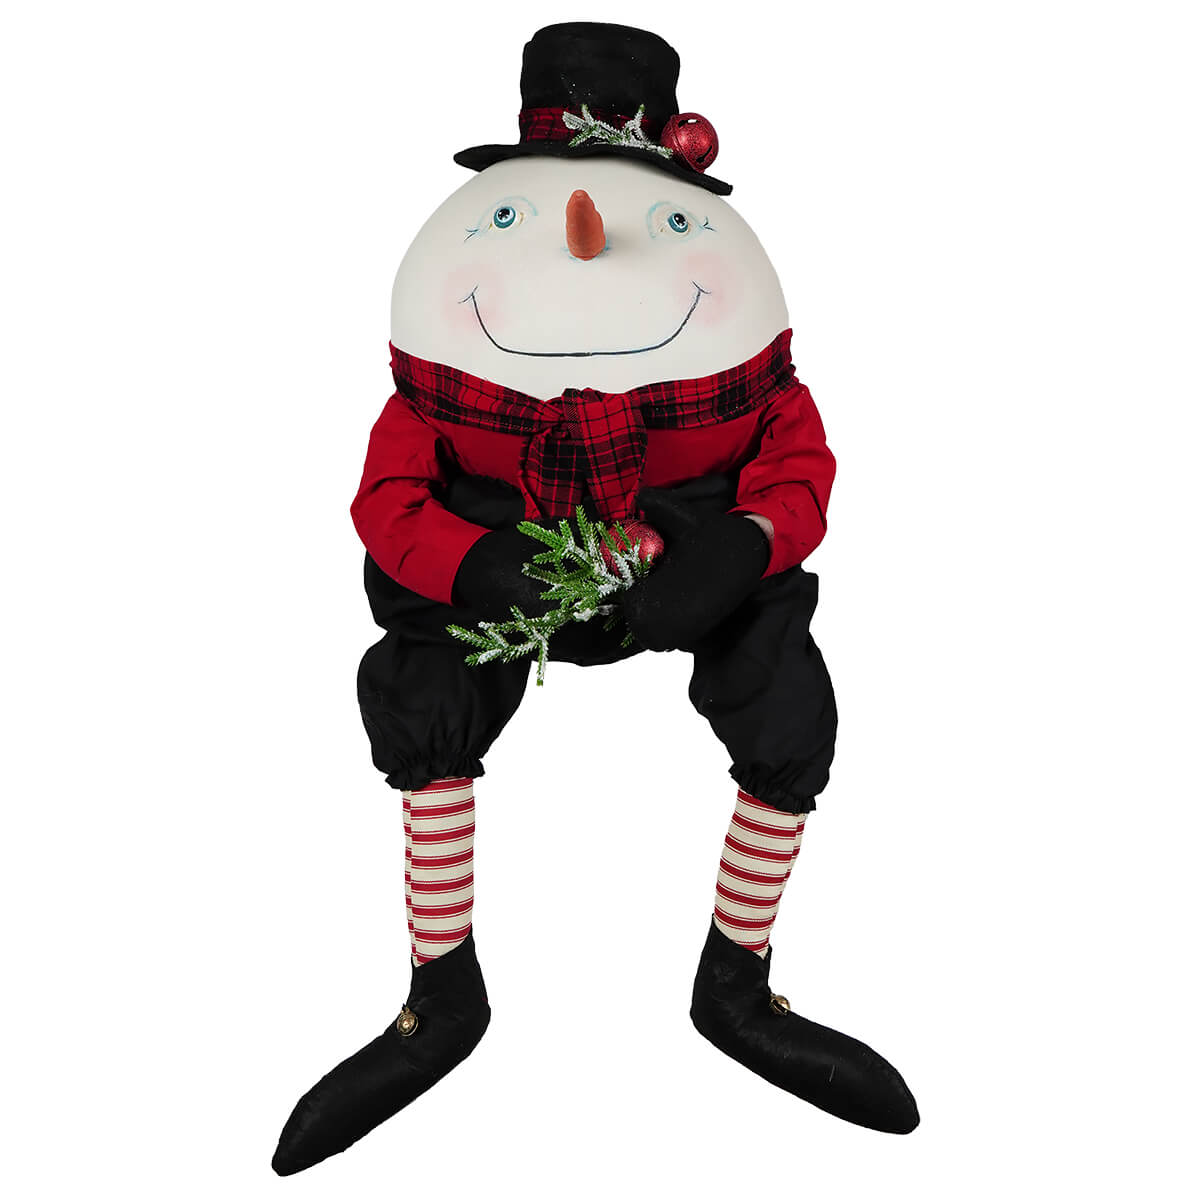 Abercrombie Snowman Figure